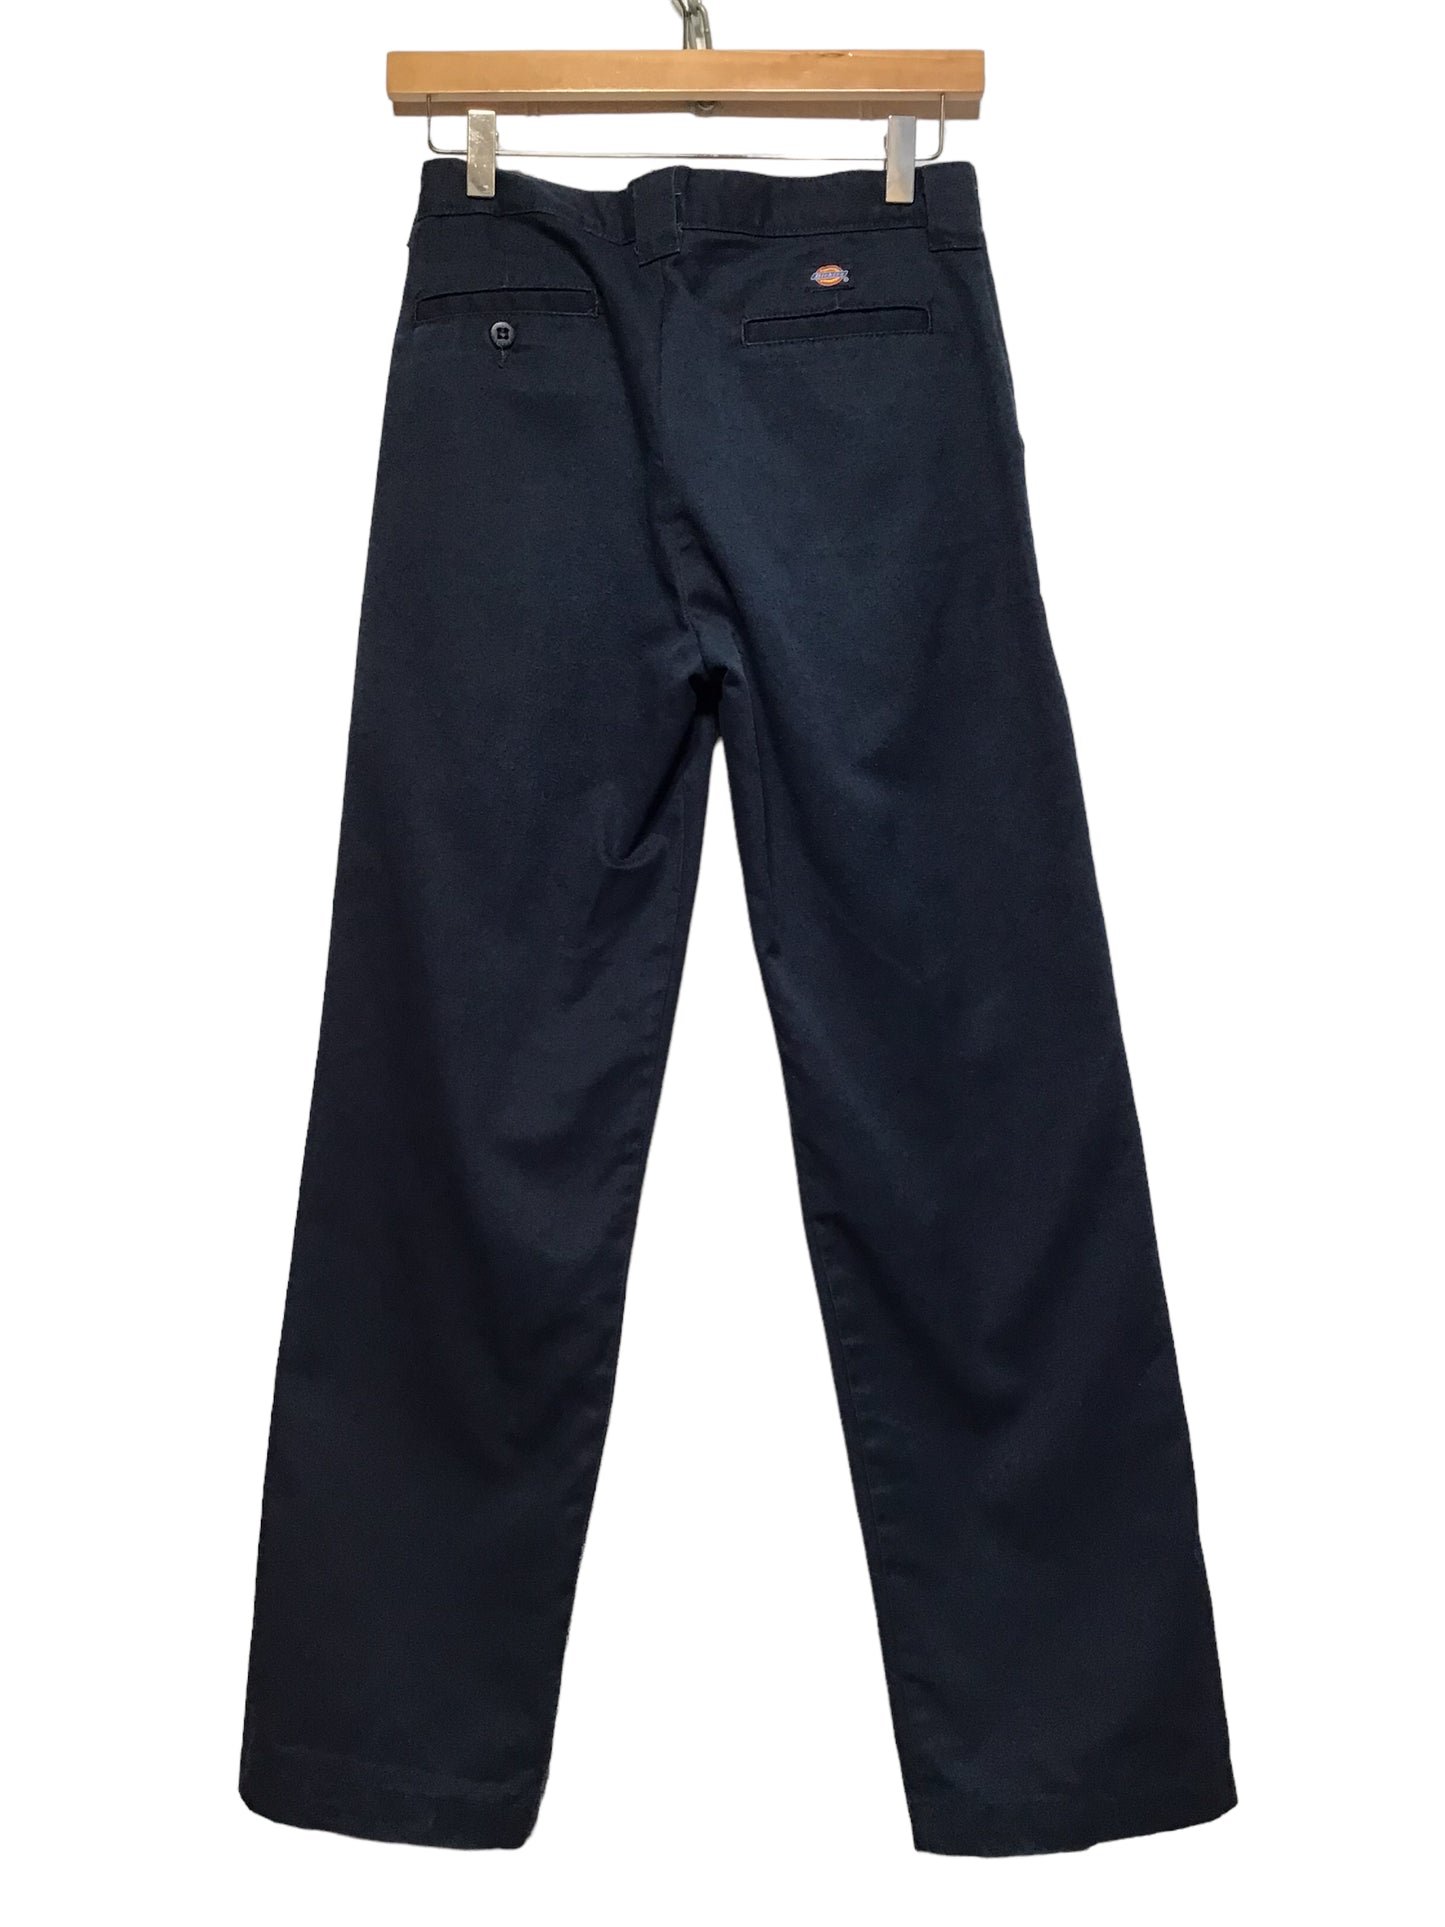 Dickies 874 Original Fit Navy Pants (28x28)